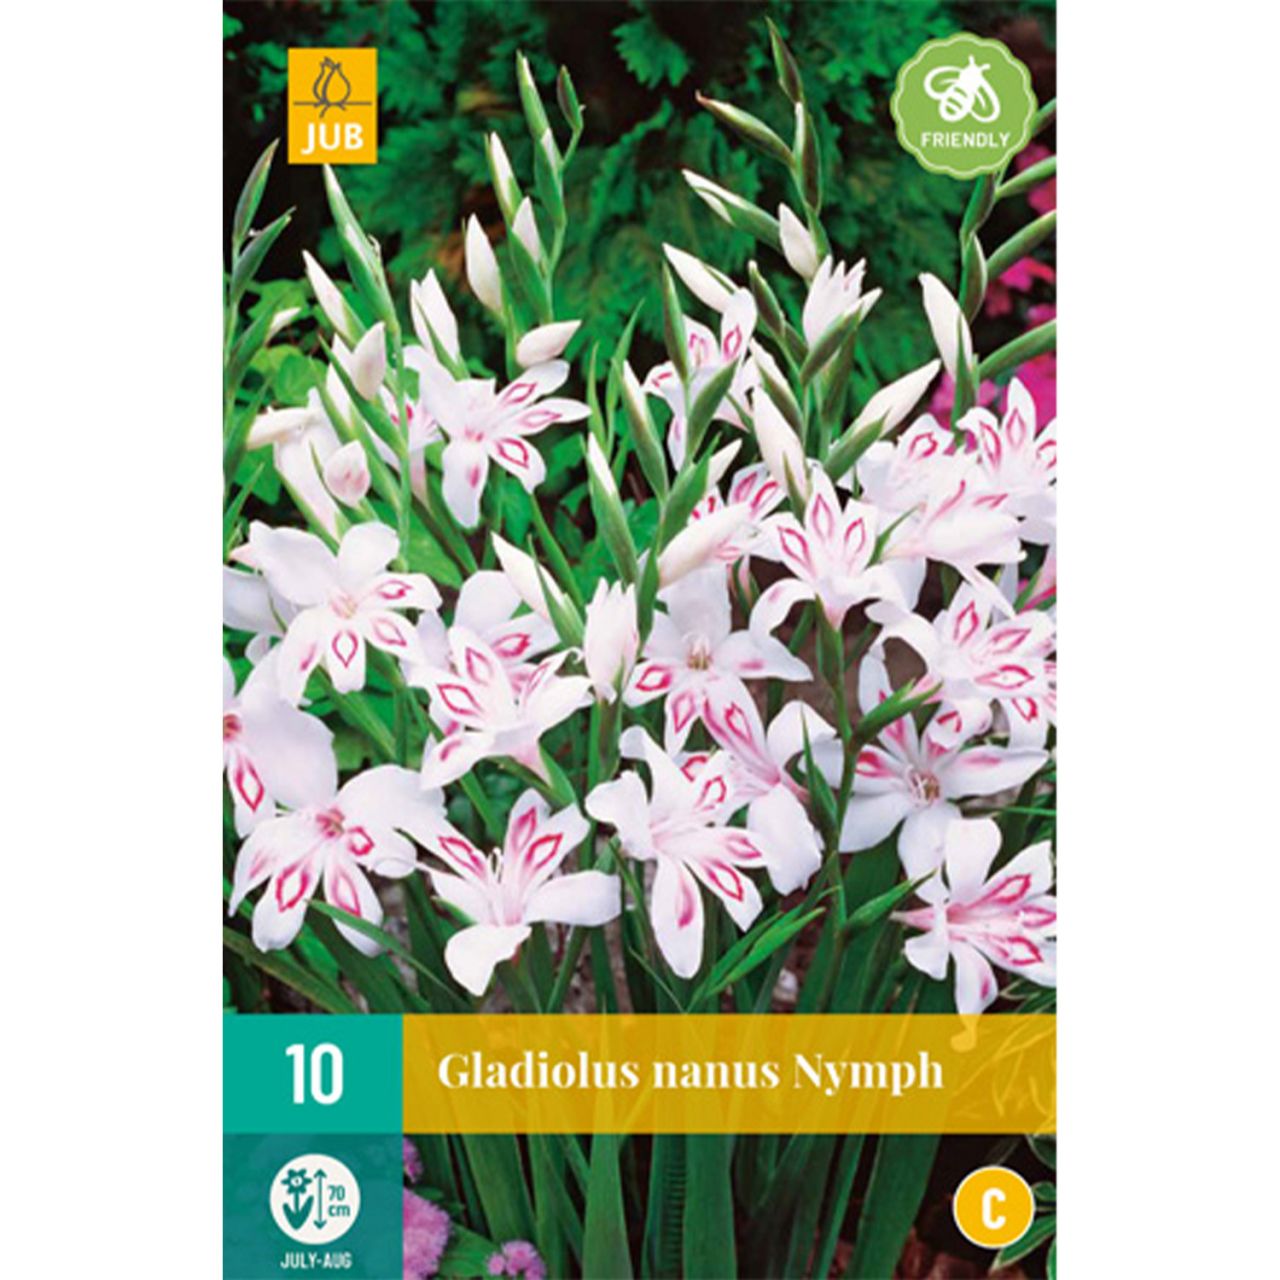 Kategorie <b>Frühlings-Blumenzwiebeln </b> - Zwerg-Gladiole Nanus 'Nymph' - 10 Stück - Gladiolus